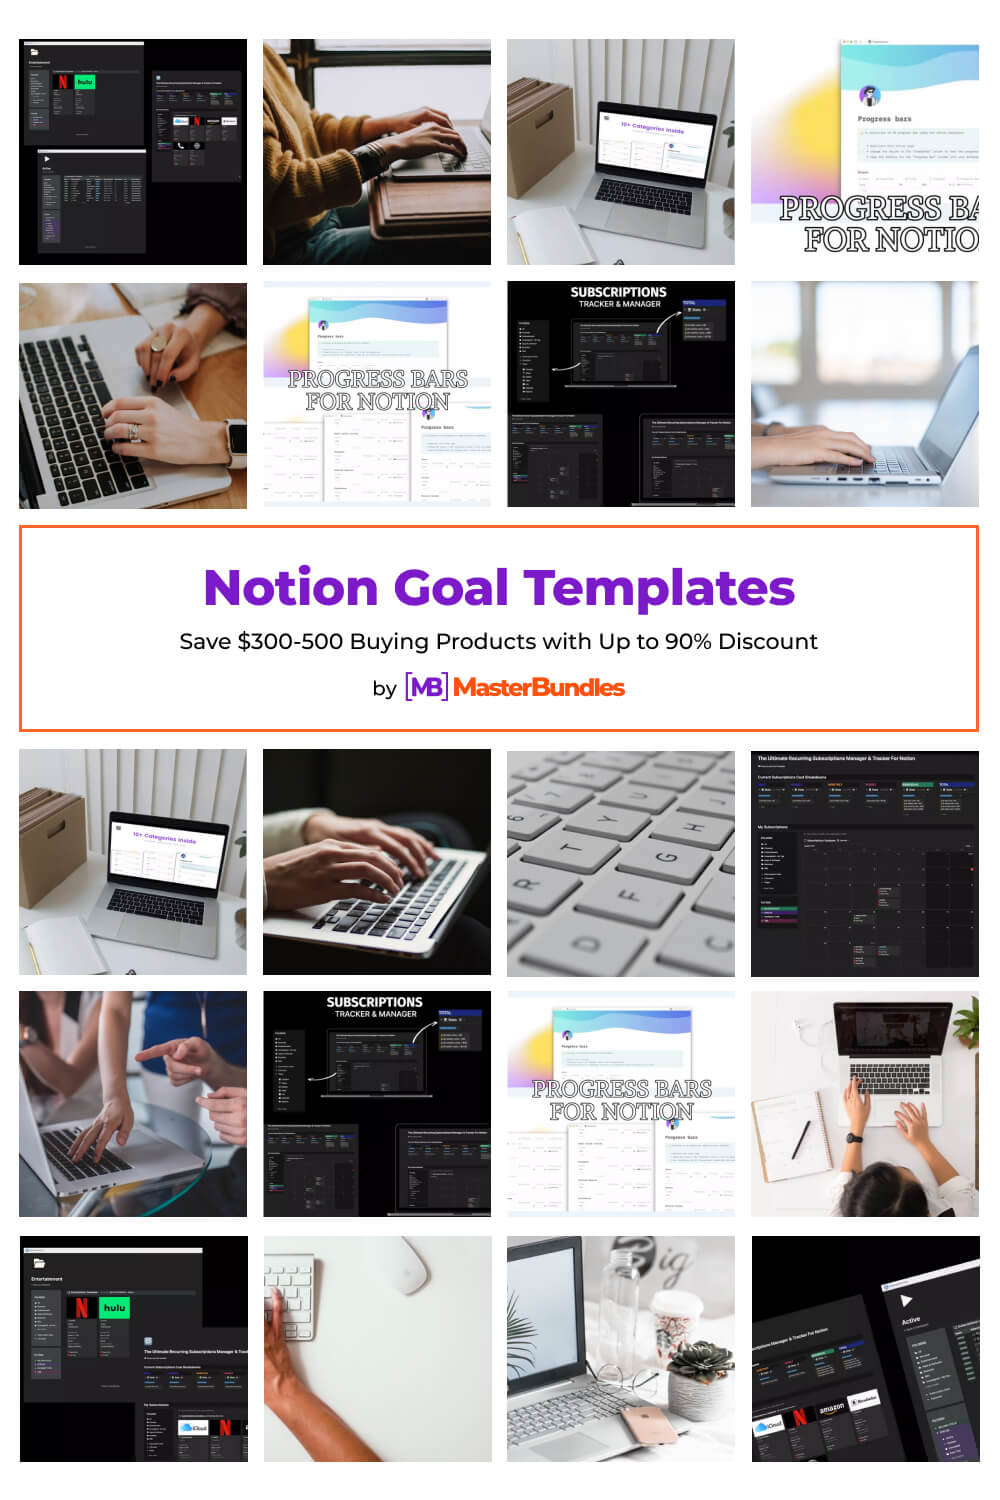 notion goal templates pinterest image.